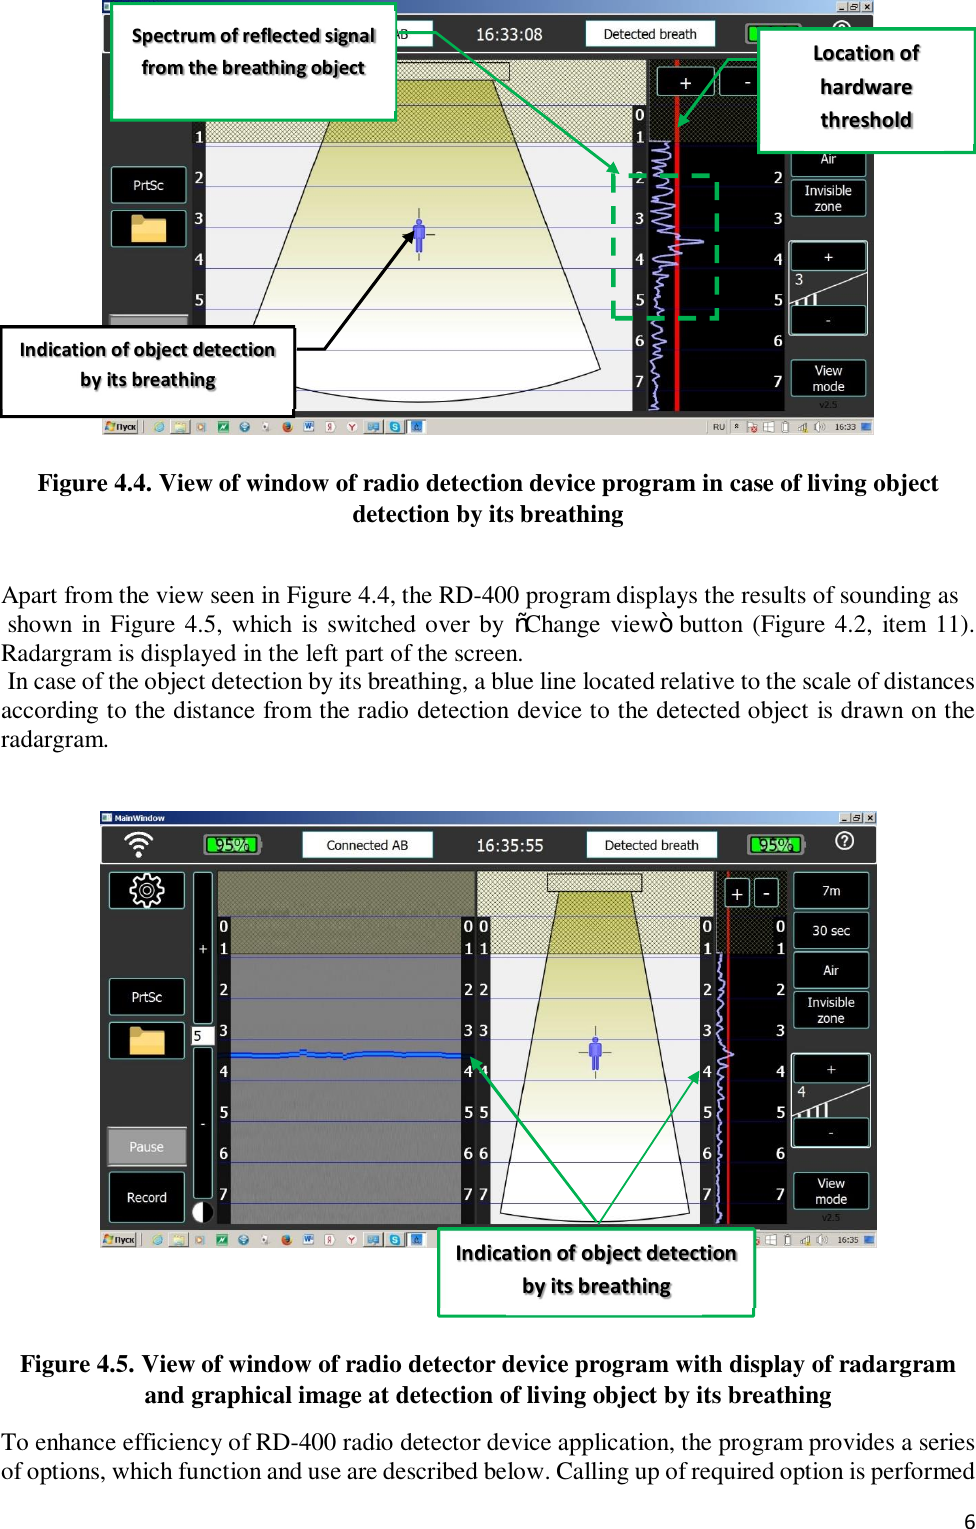 Page 7 of 12 - USer Manual RD-400 Radar-detector